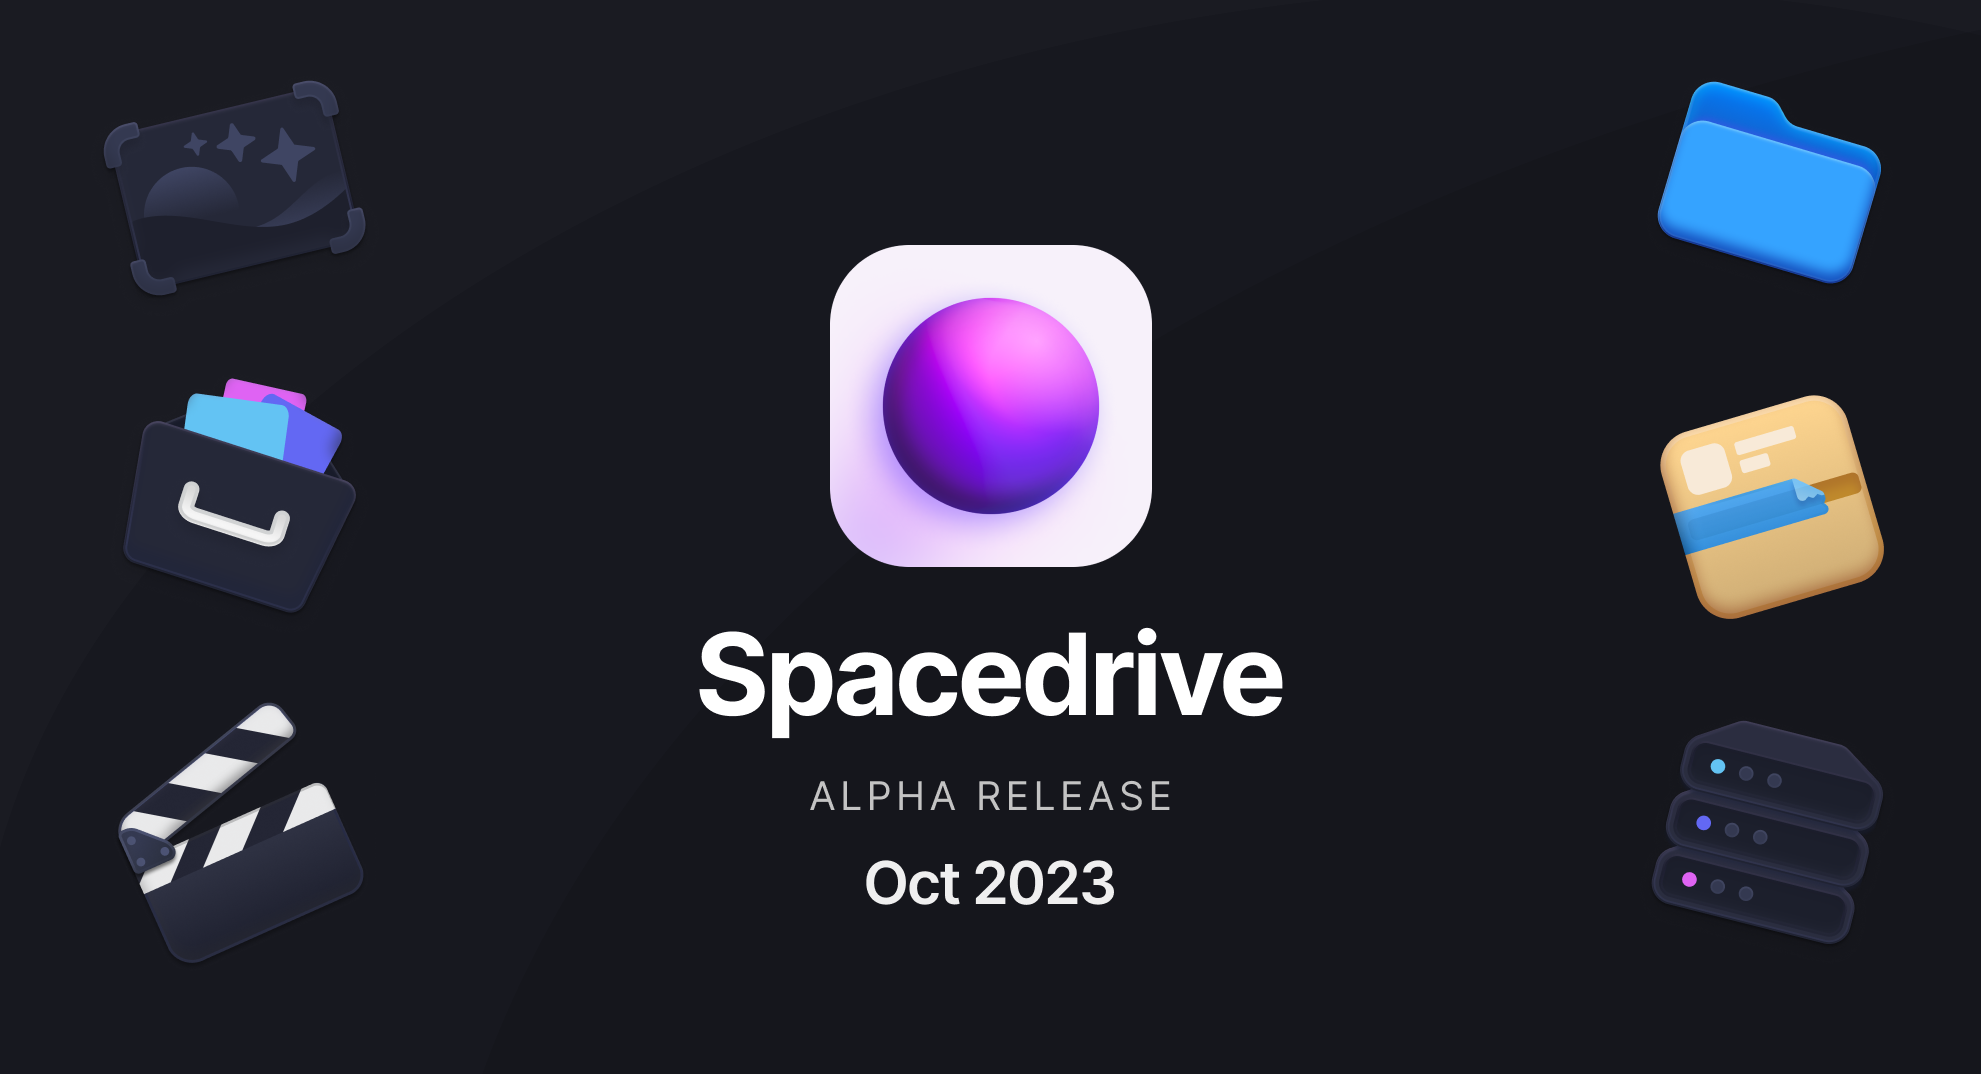 www.spacedrive.com